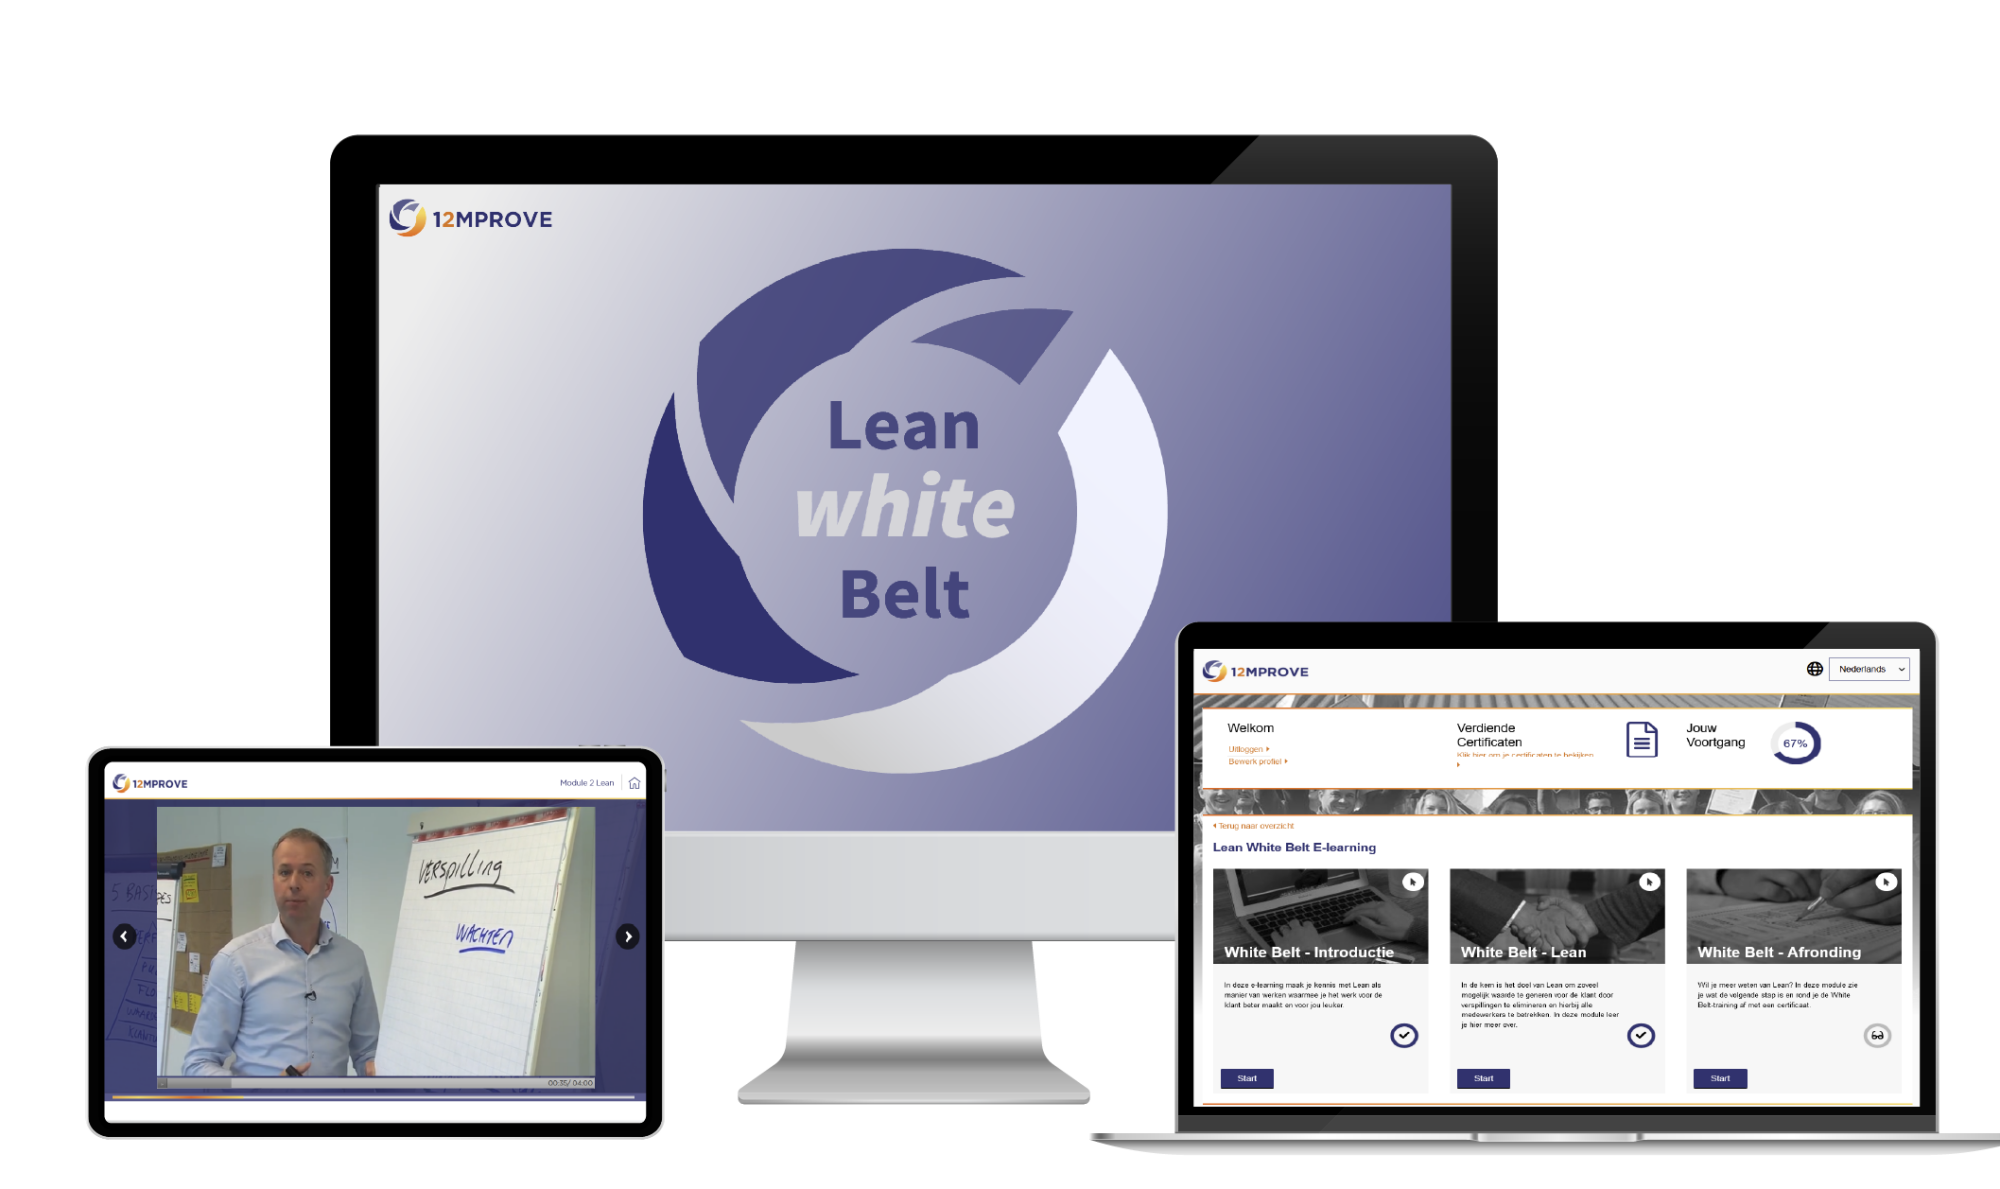 Lean white belt online